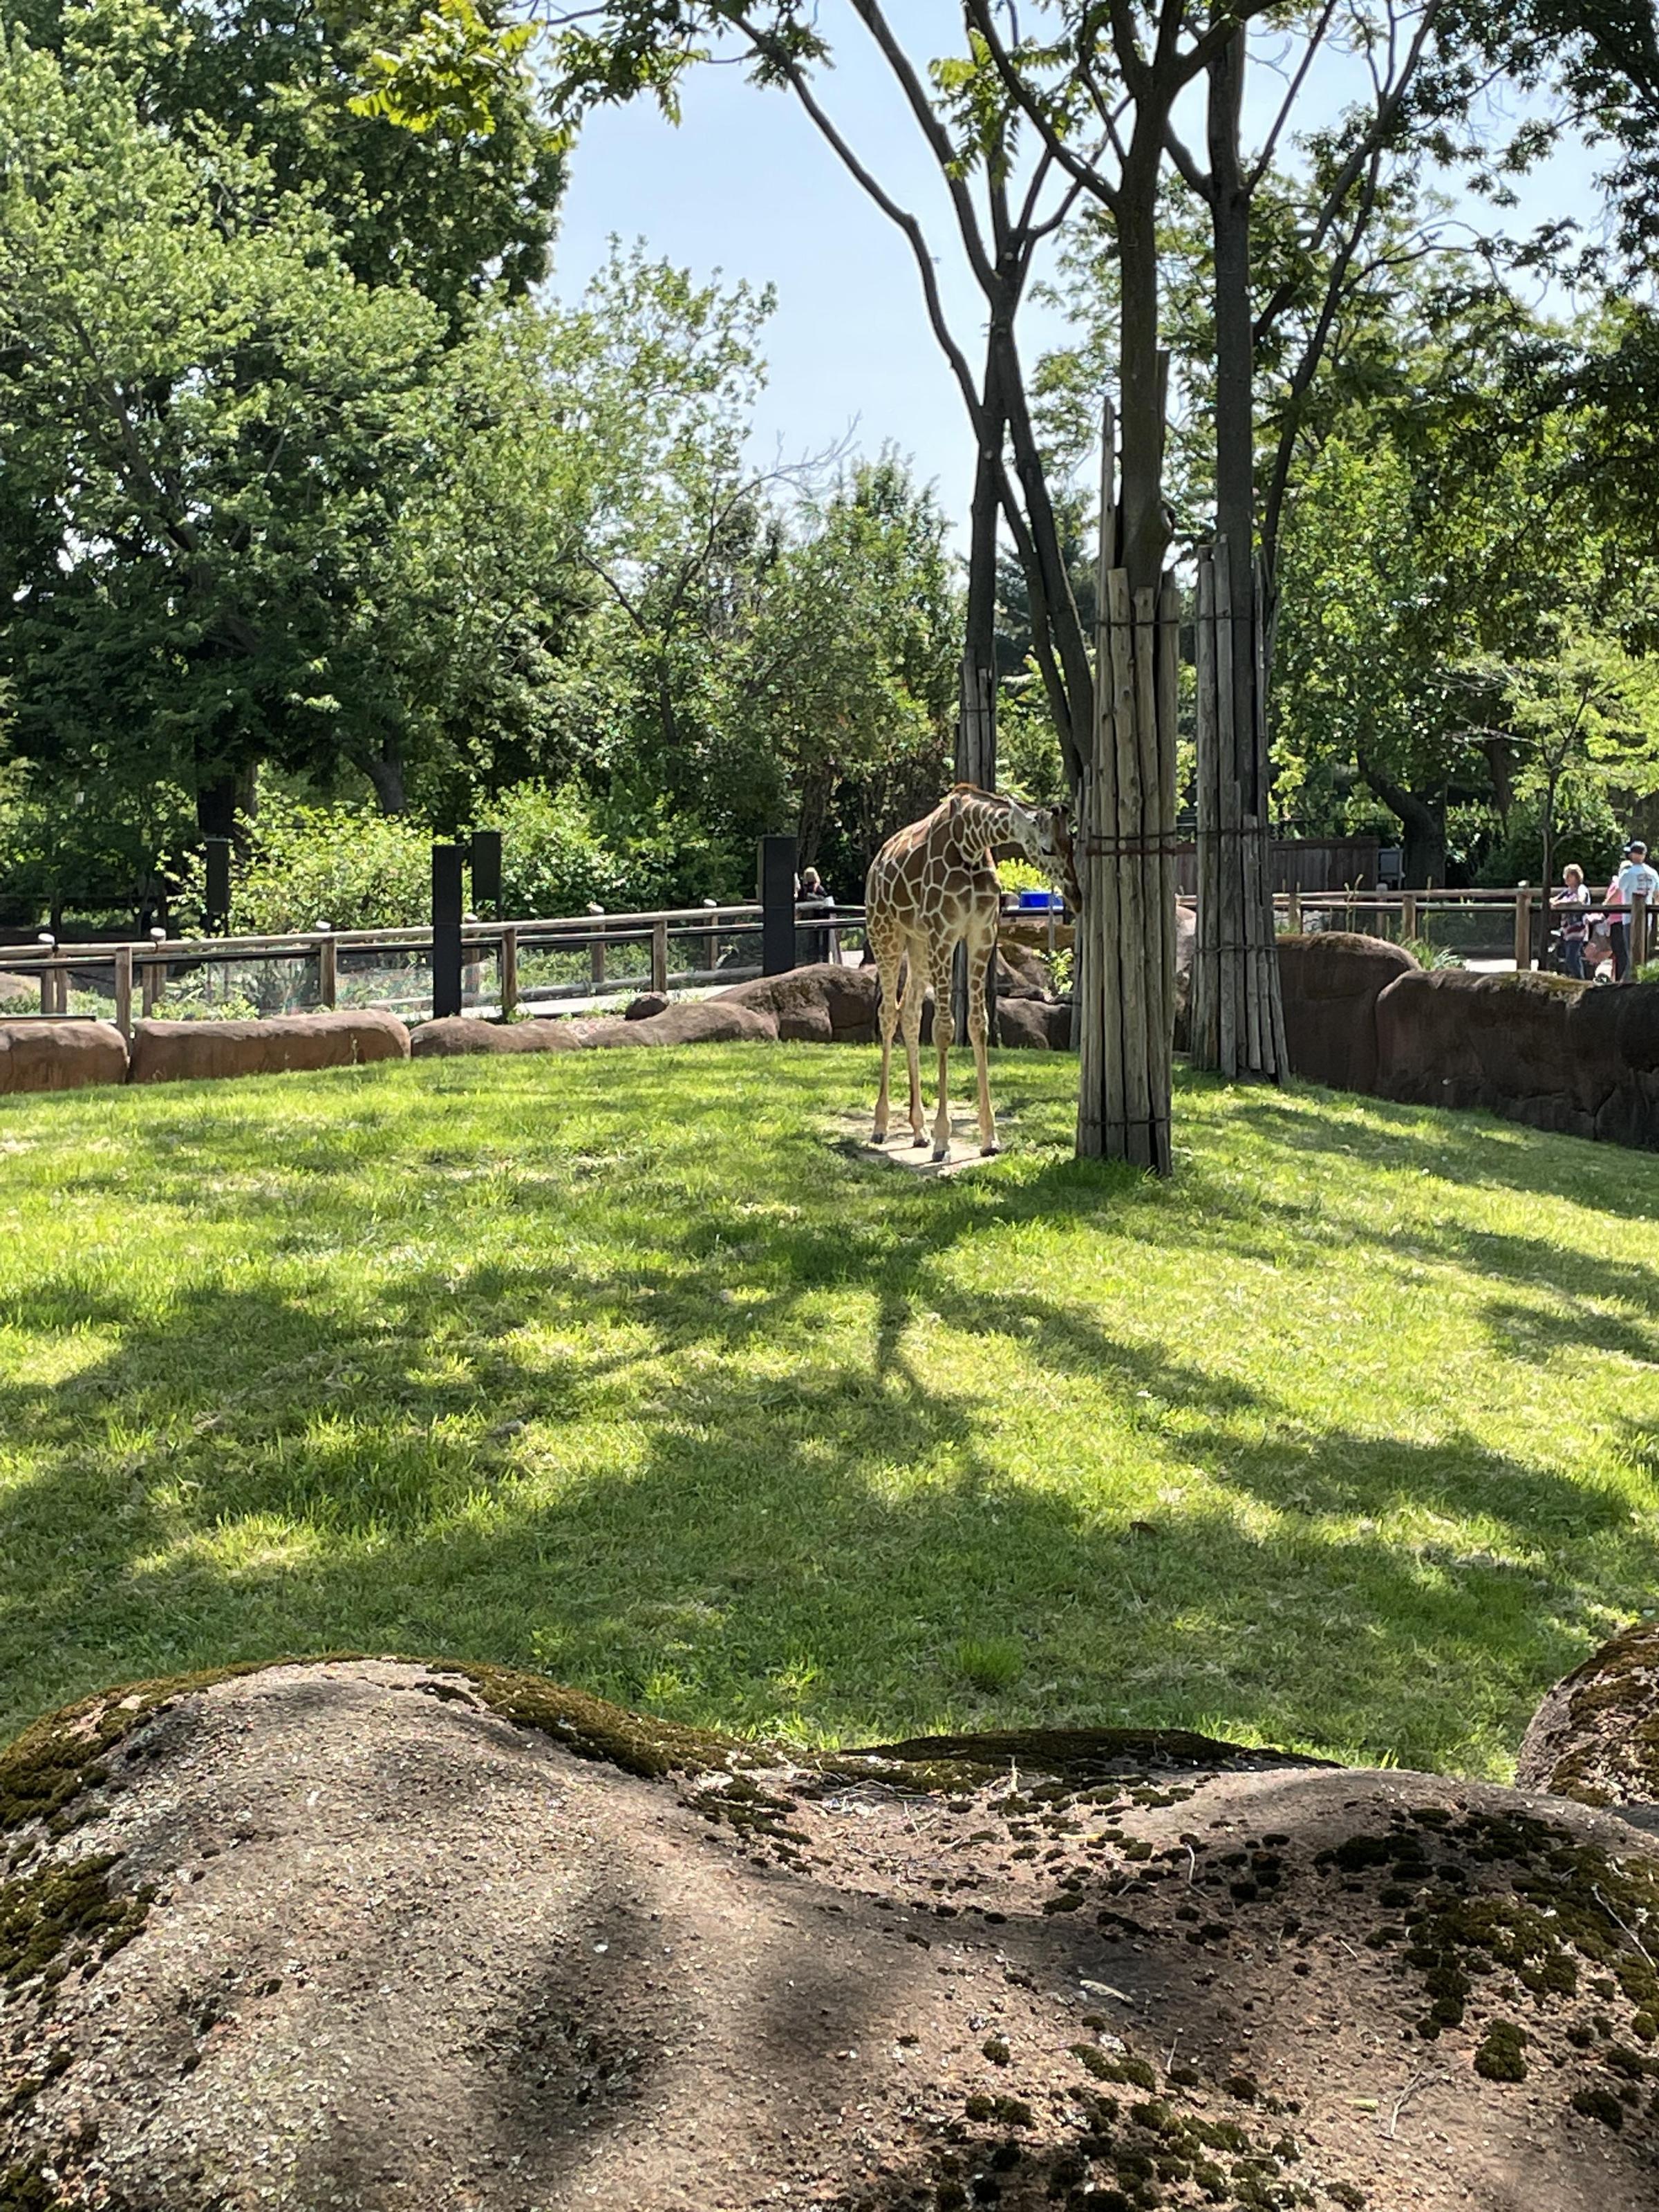 Saint Louis Zoo giraffe two